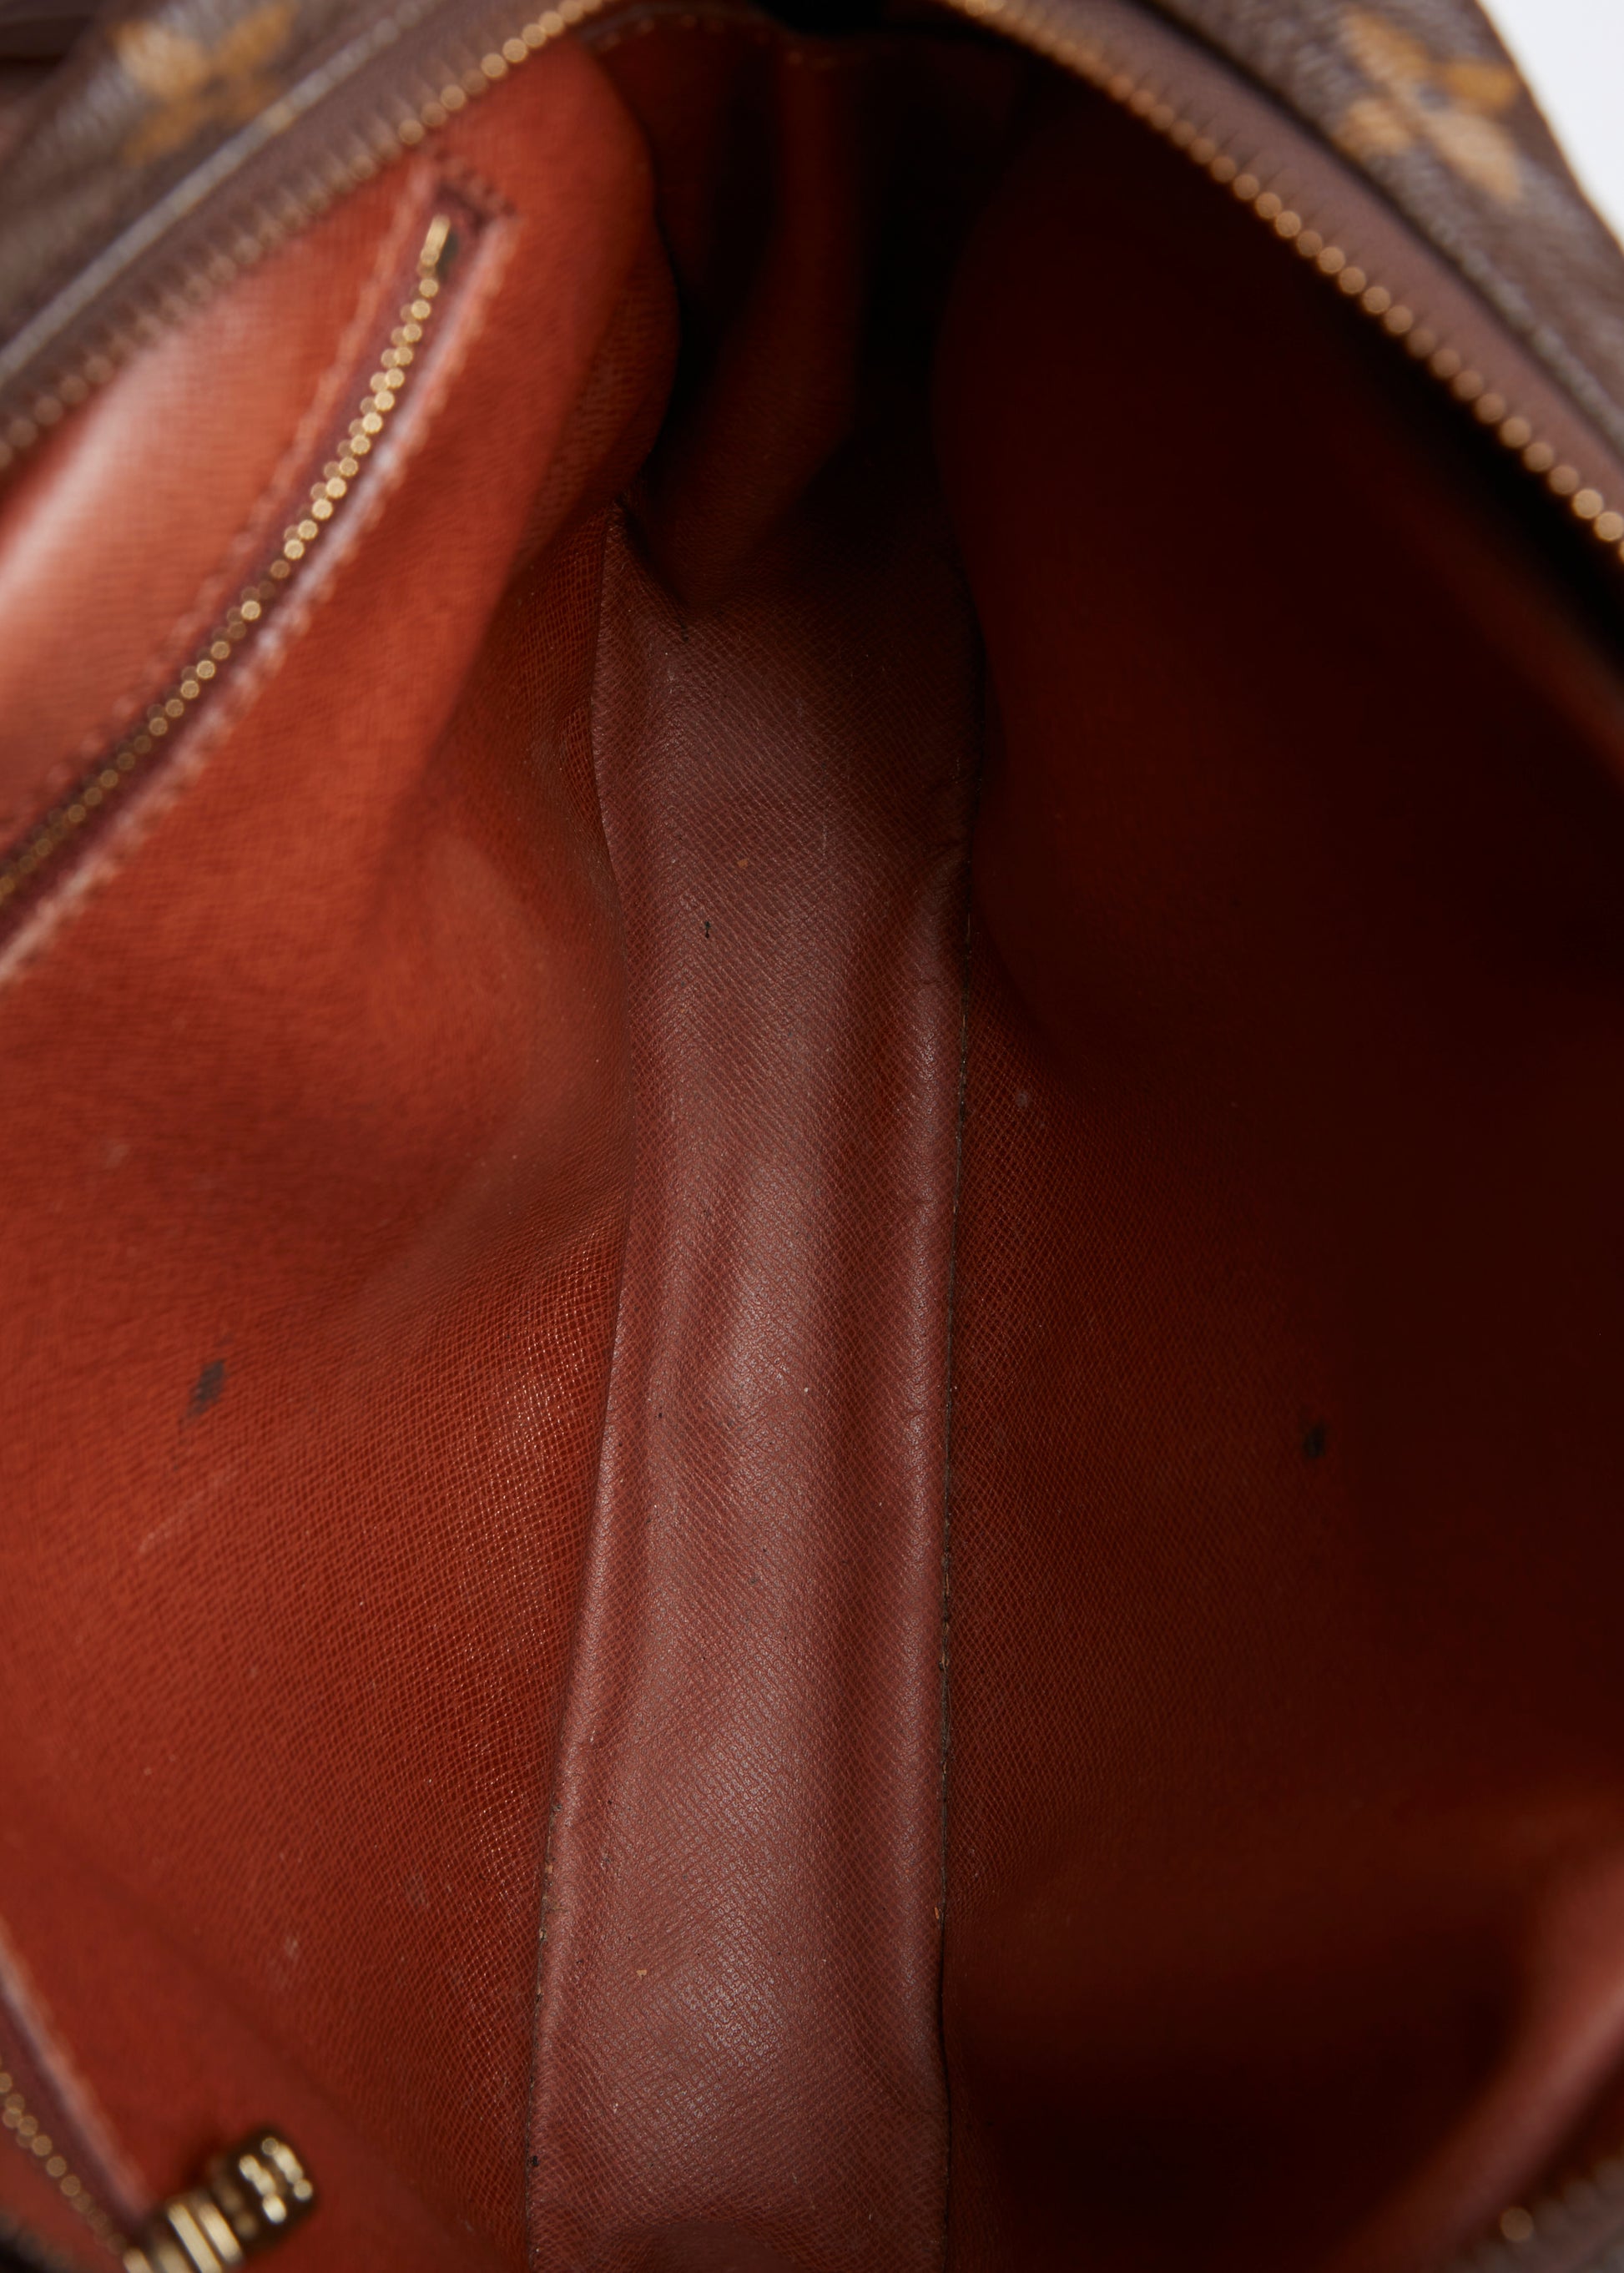 Louis Vuitton Jeune Fille Gm Cross Body Bag Purse Monogram M51225 Mi884